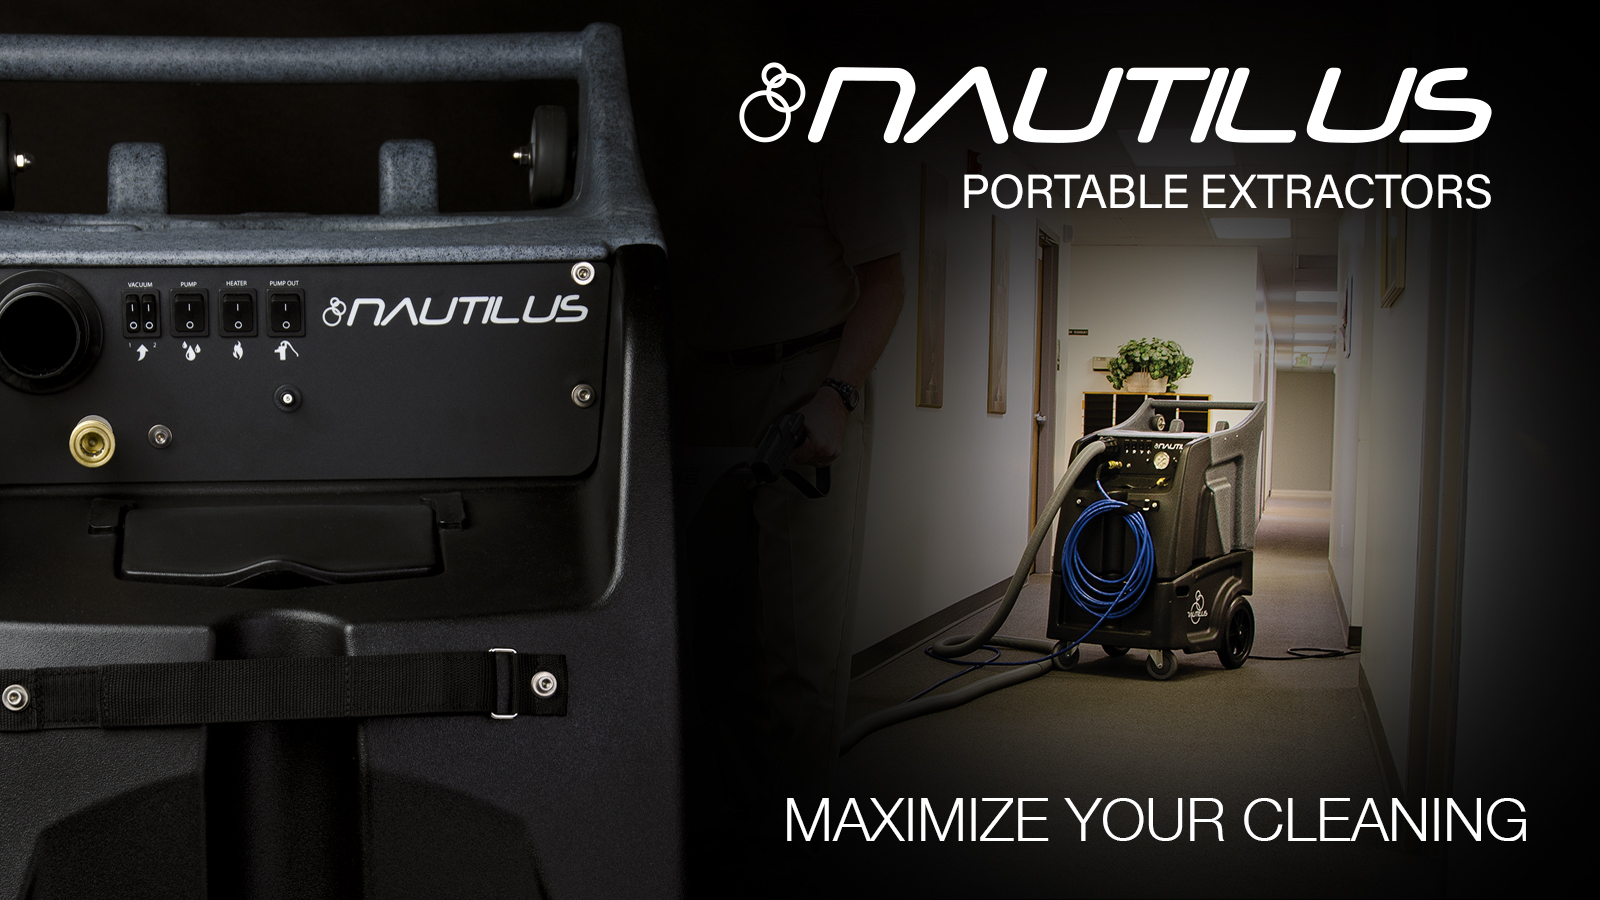 Nautilus Portable Extractors.